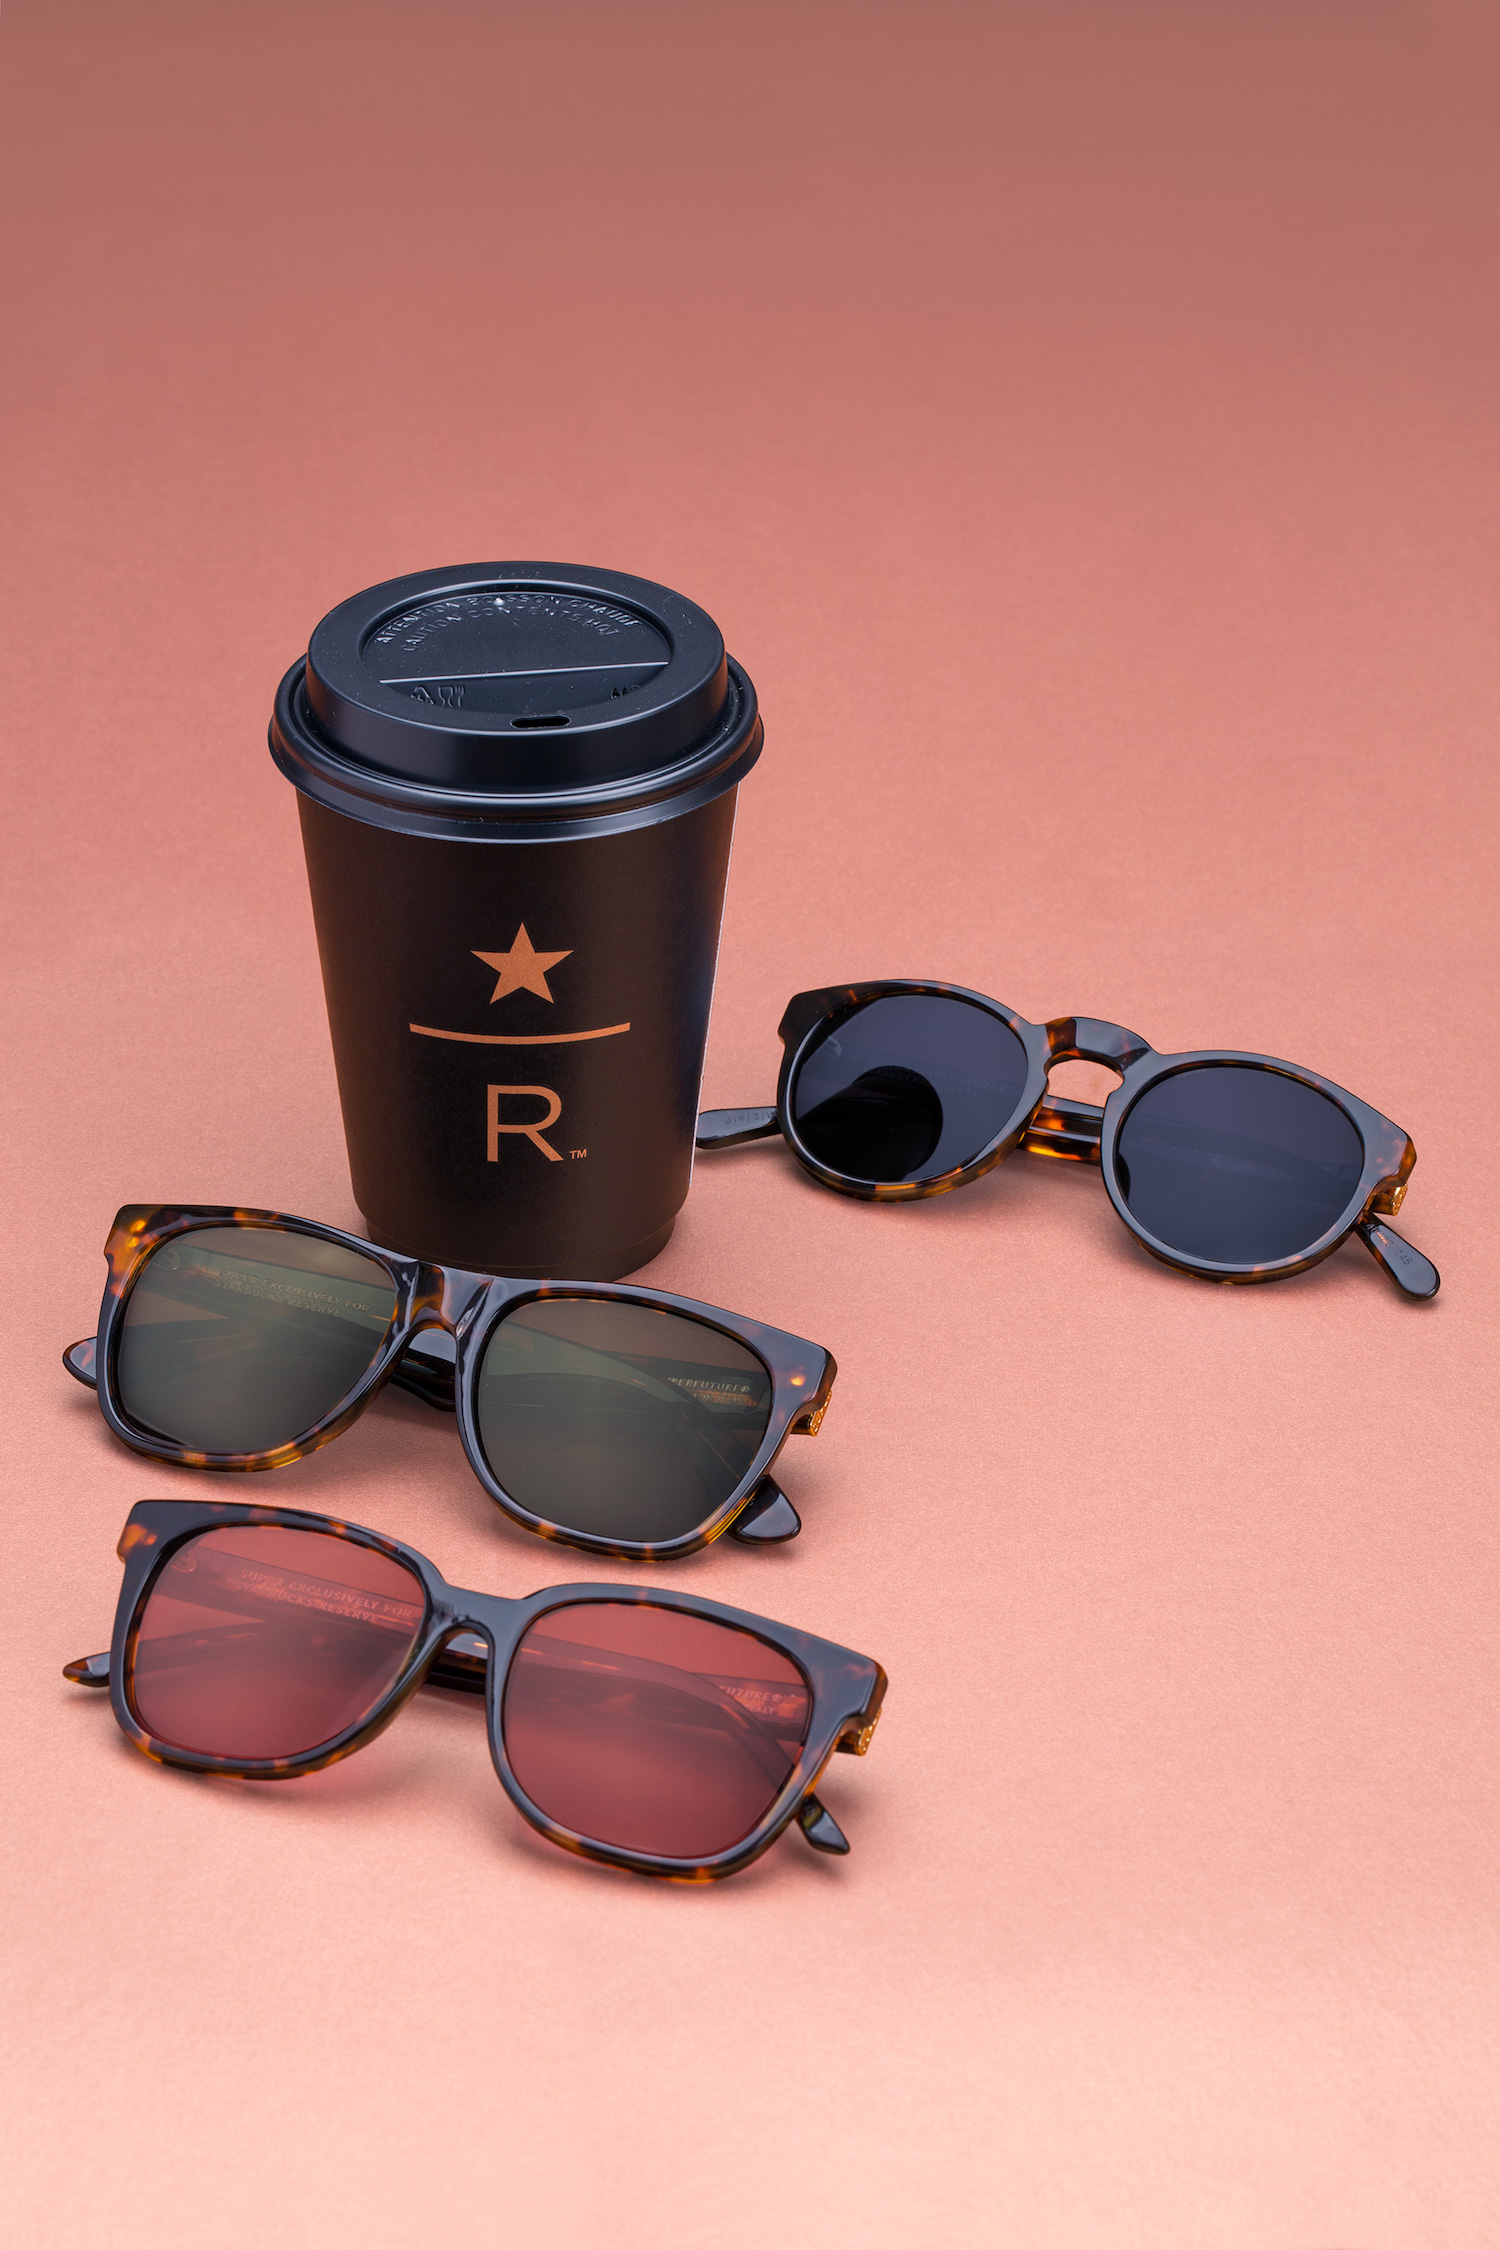 SUPER by RETROSUPERFUTURE Partner with Starbucks for Sunglasses Capsule